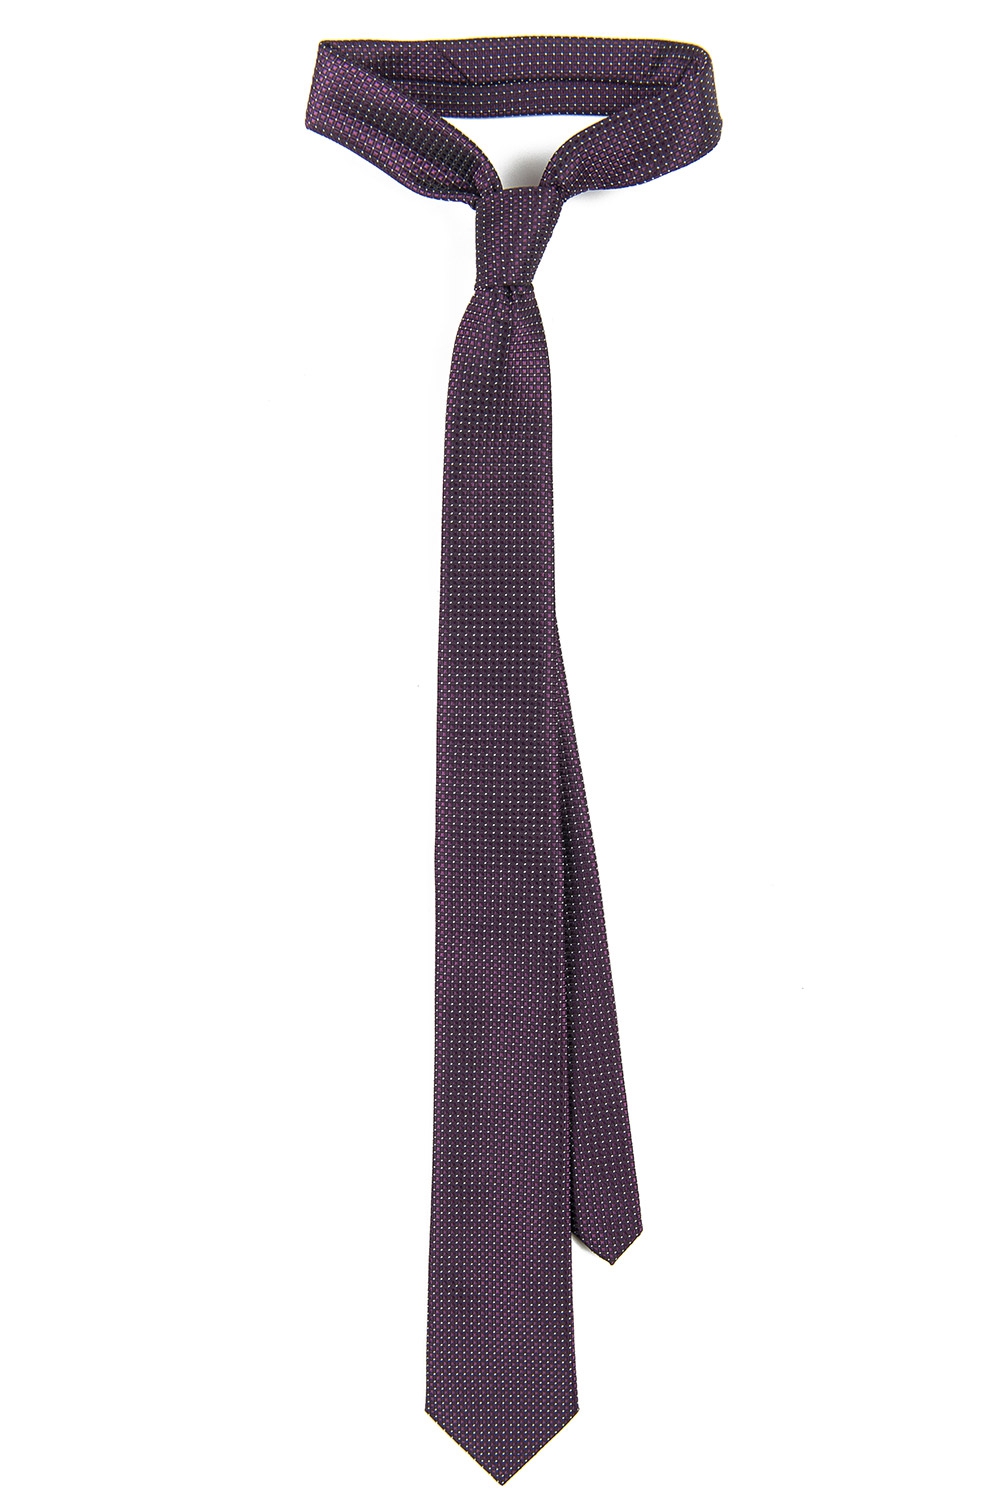 Cravata poliester tesut pruna print geometric 0